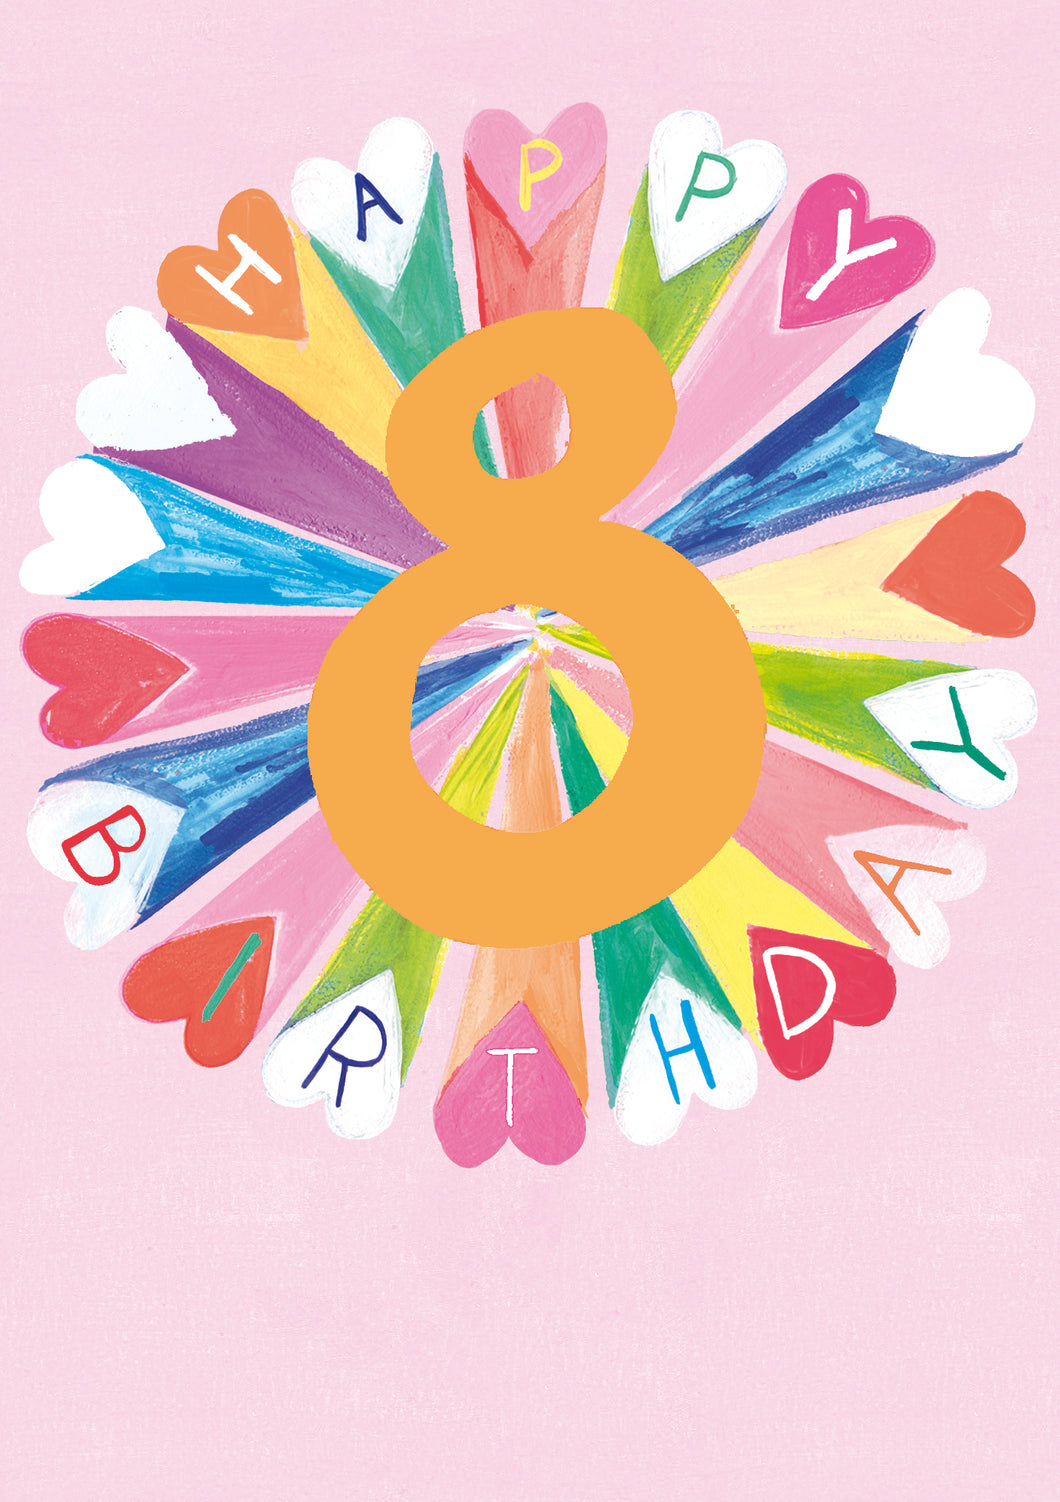 Happy 8th birthday - The Alresford Gift Shop